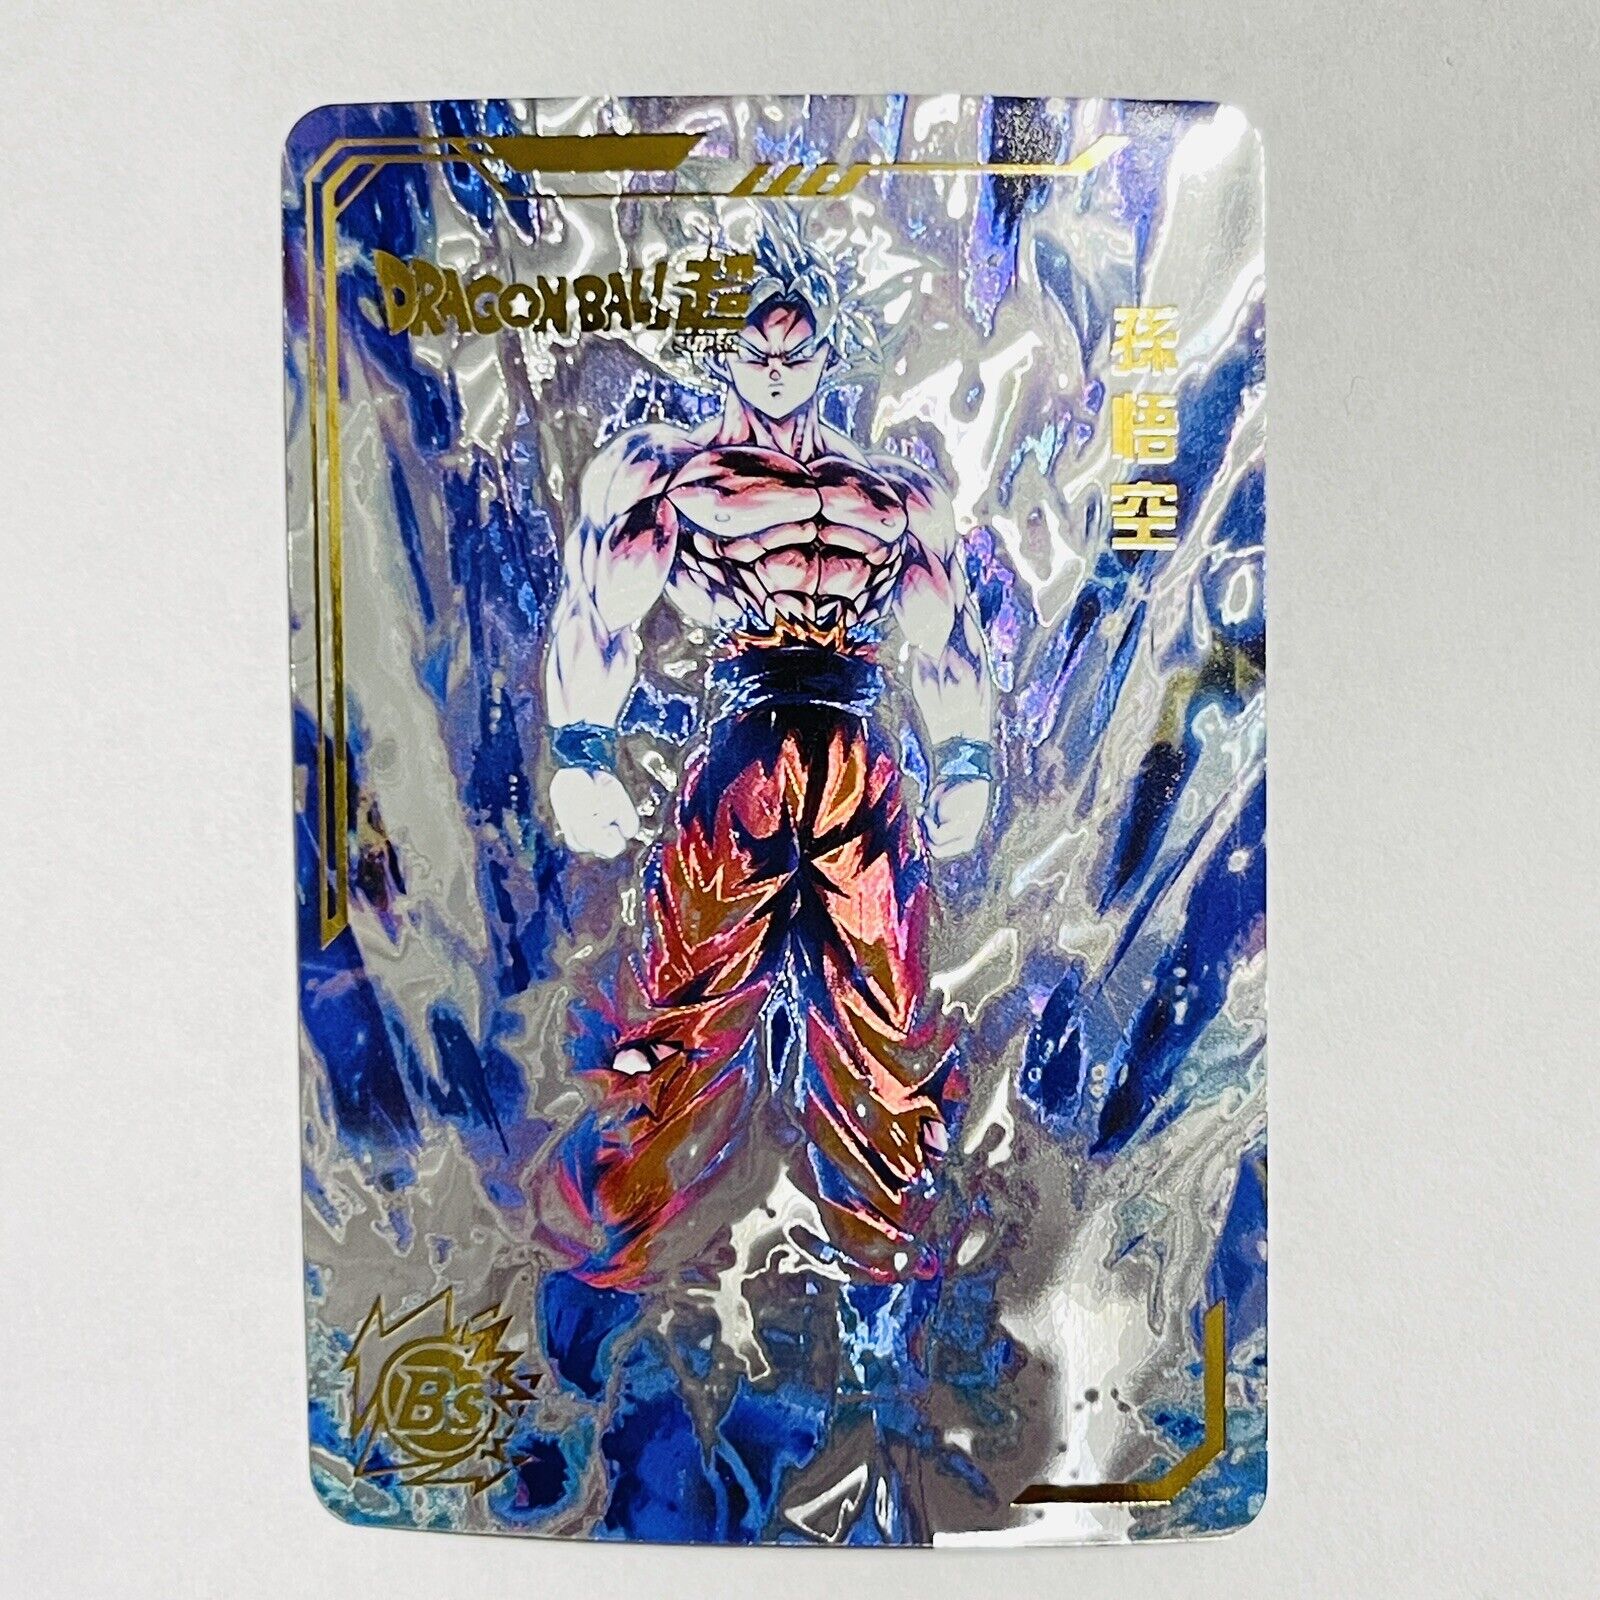 Dragonball Heroes Premium Foil Holographic Character Card - MUI Goku